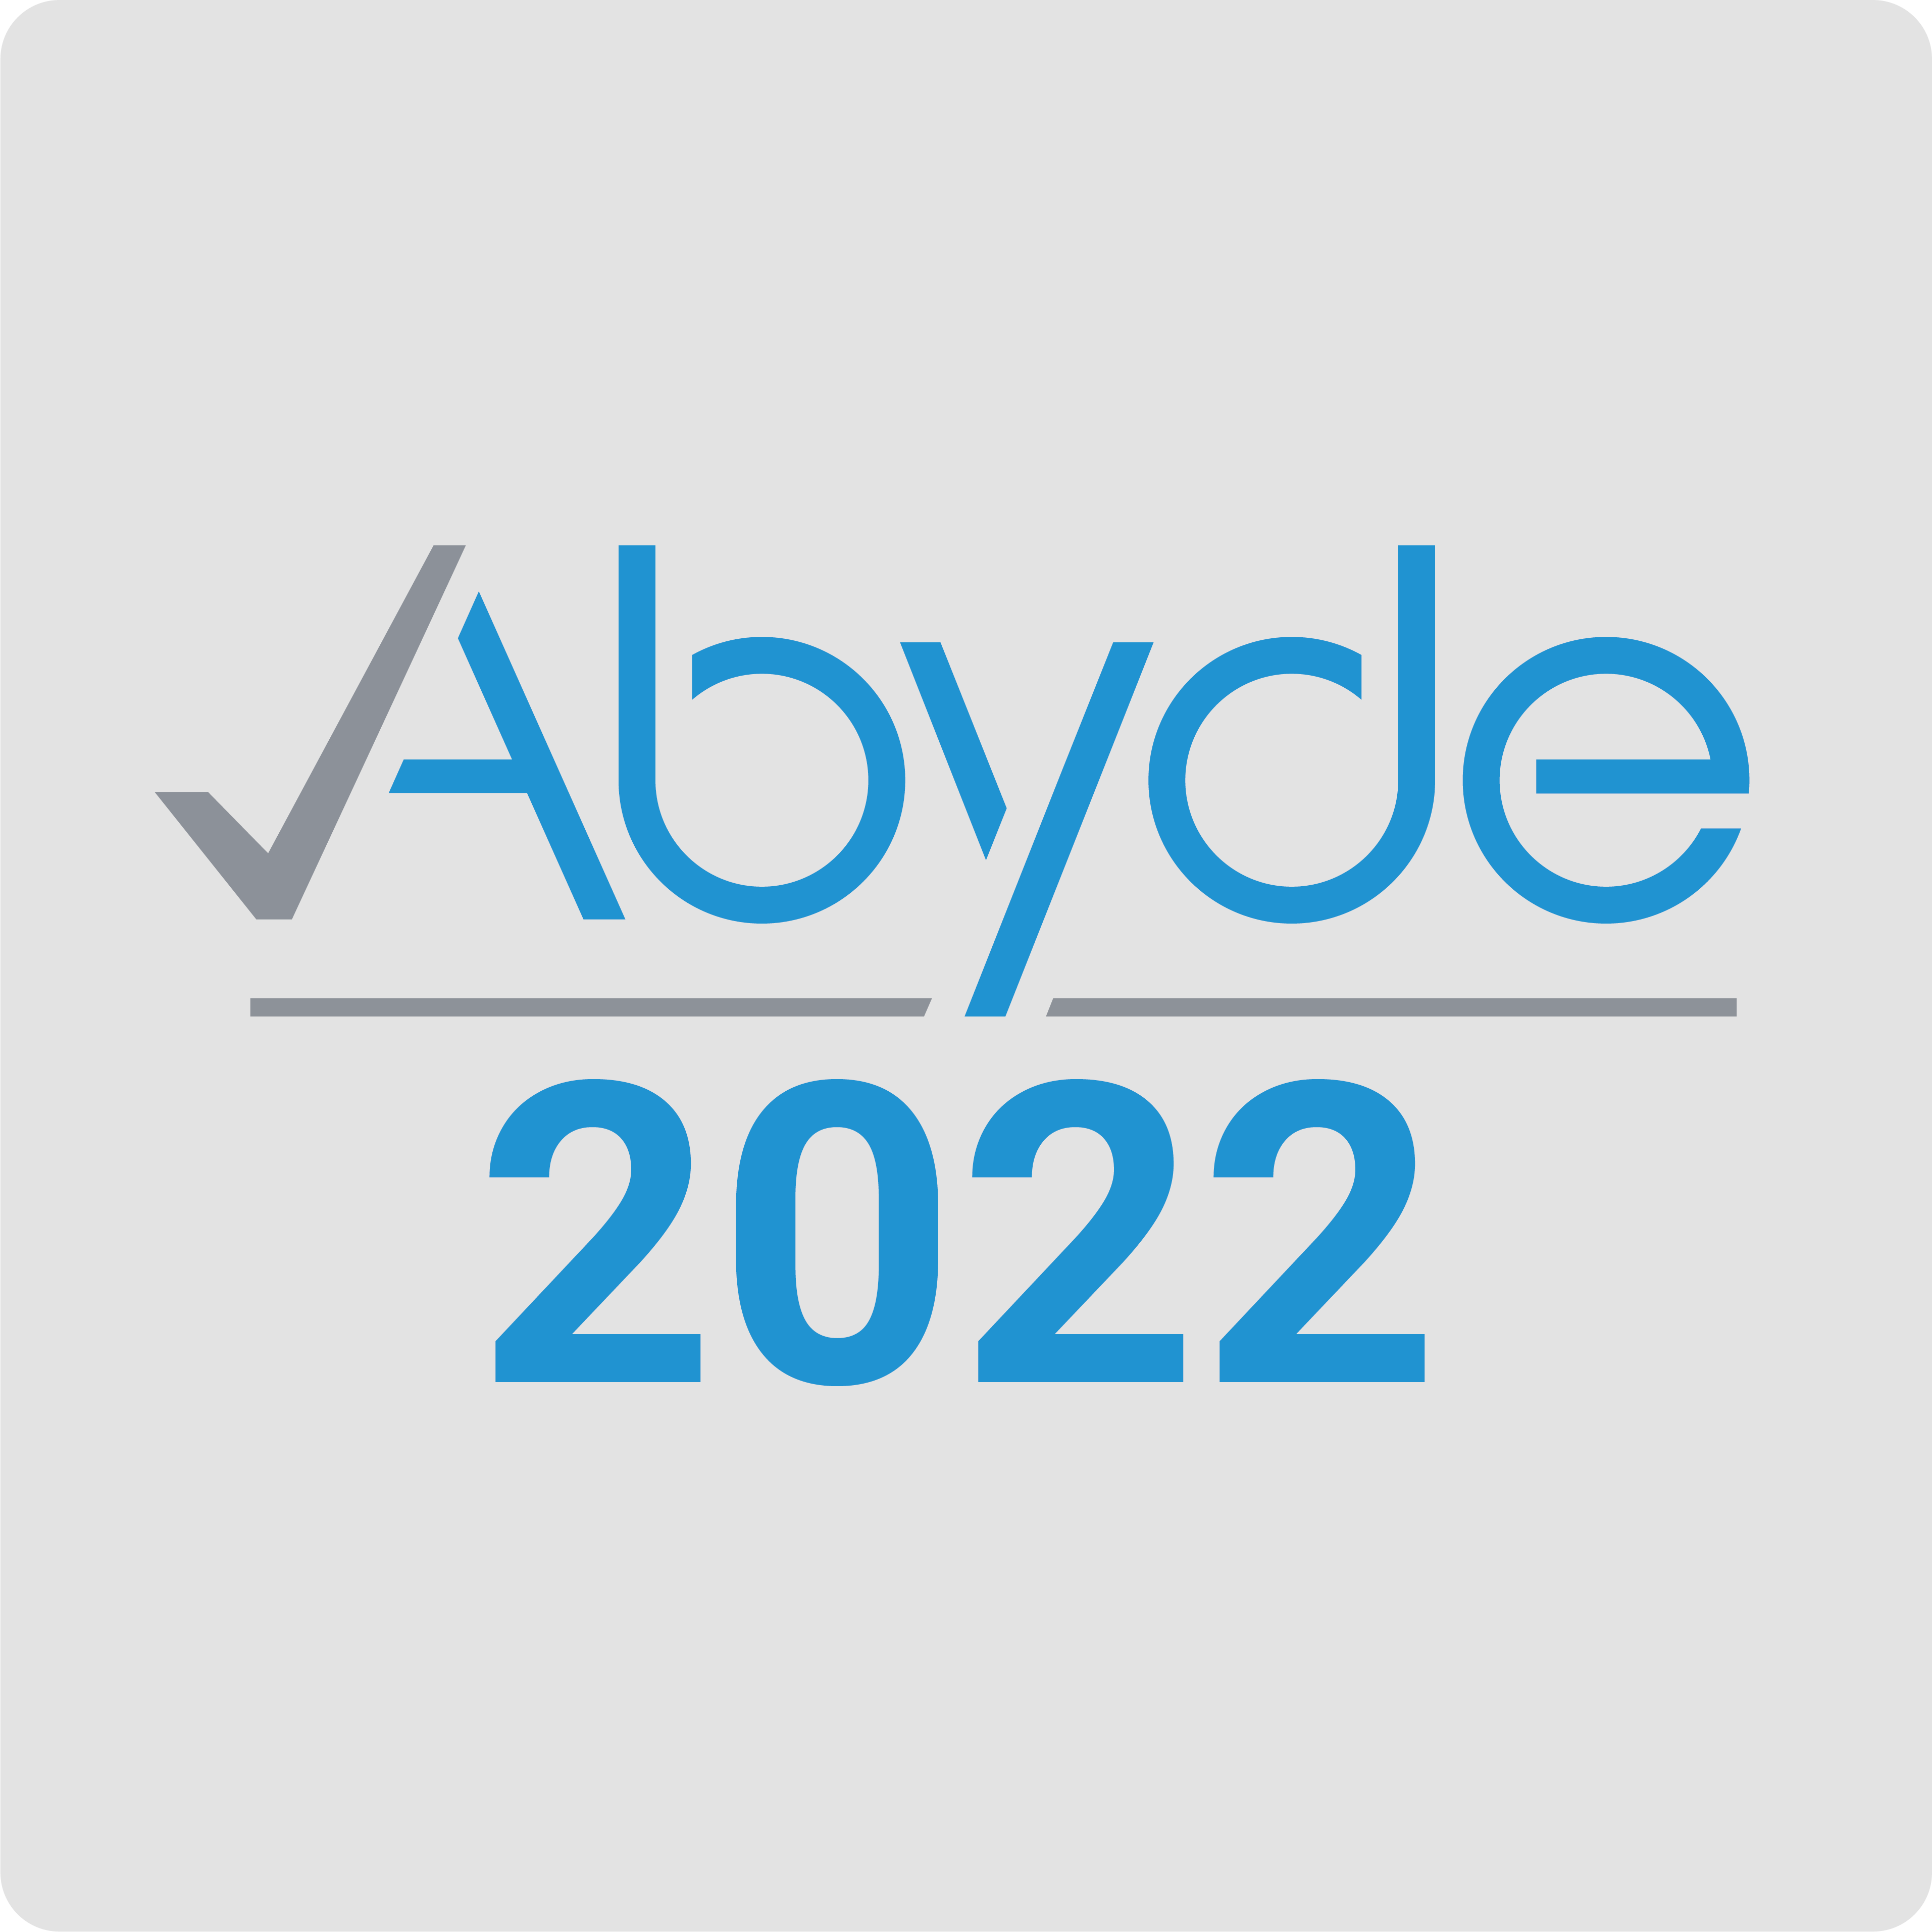 Abyde | 2022